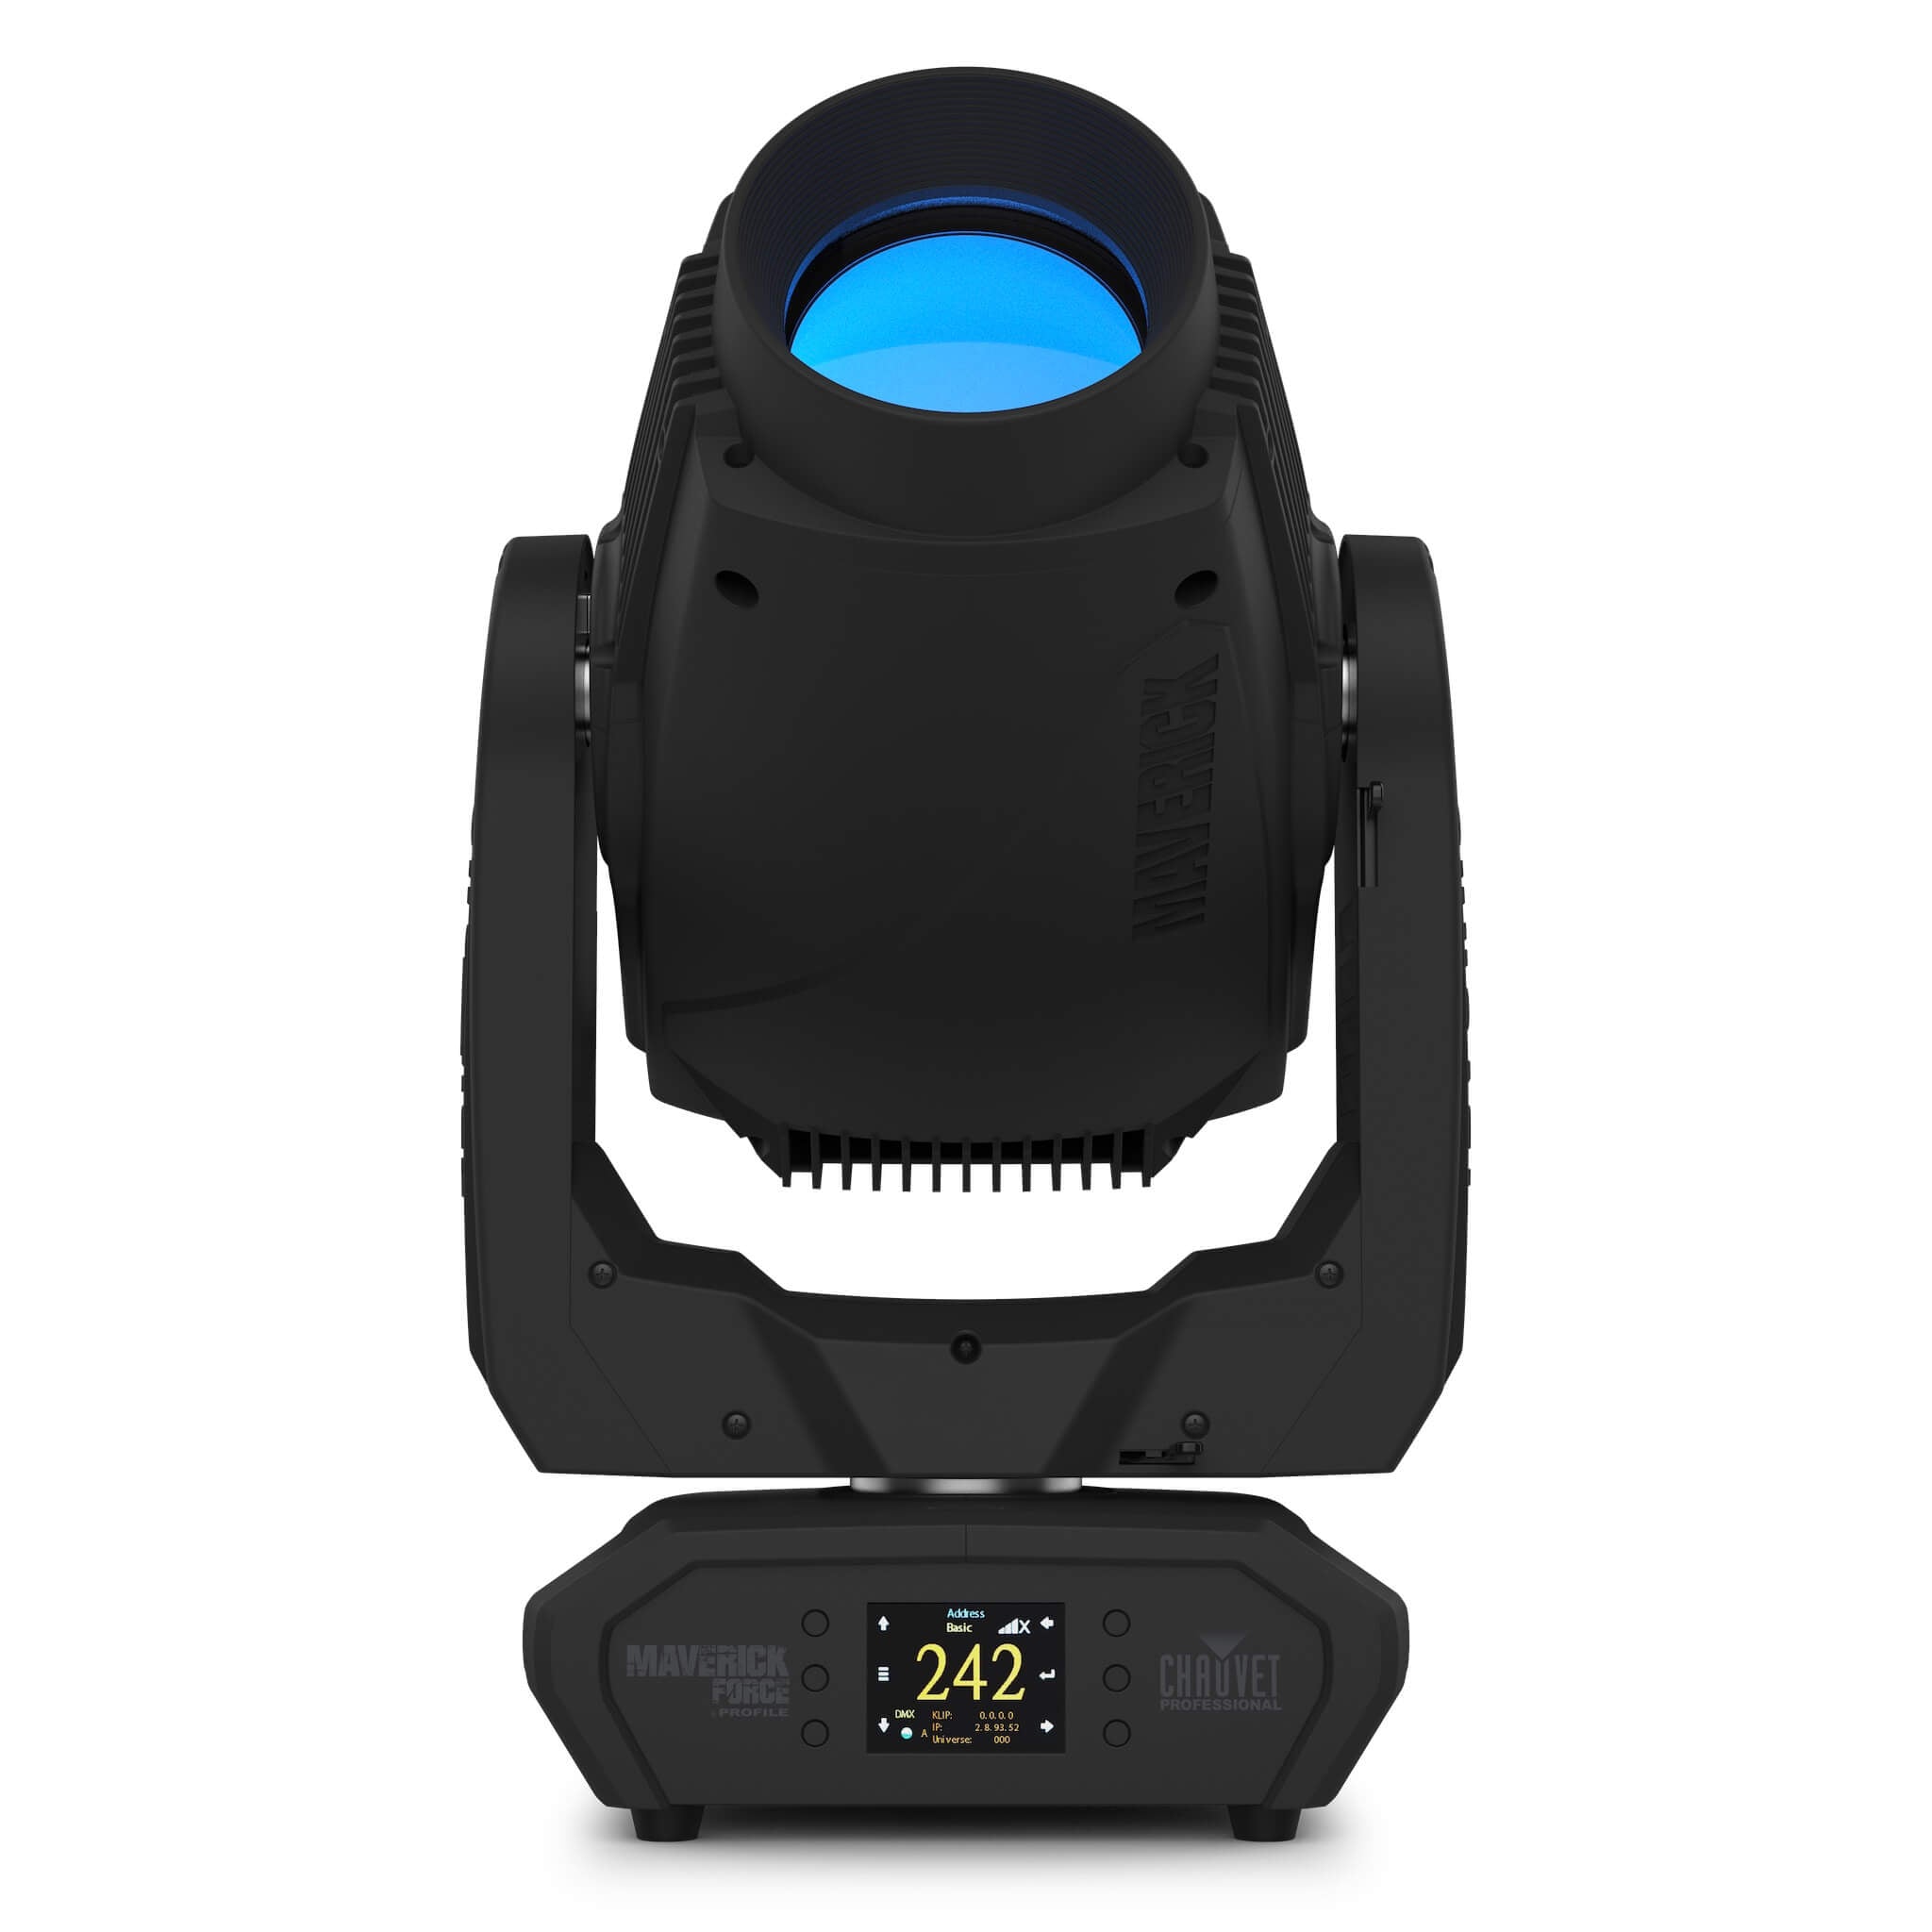 Chauvet Professional Maverick Force S Profile - LED Moving Head Light, front